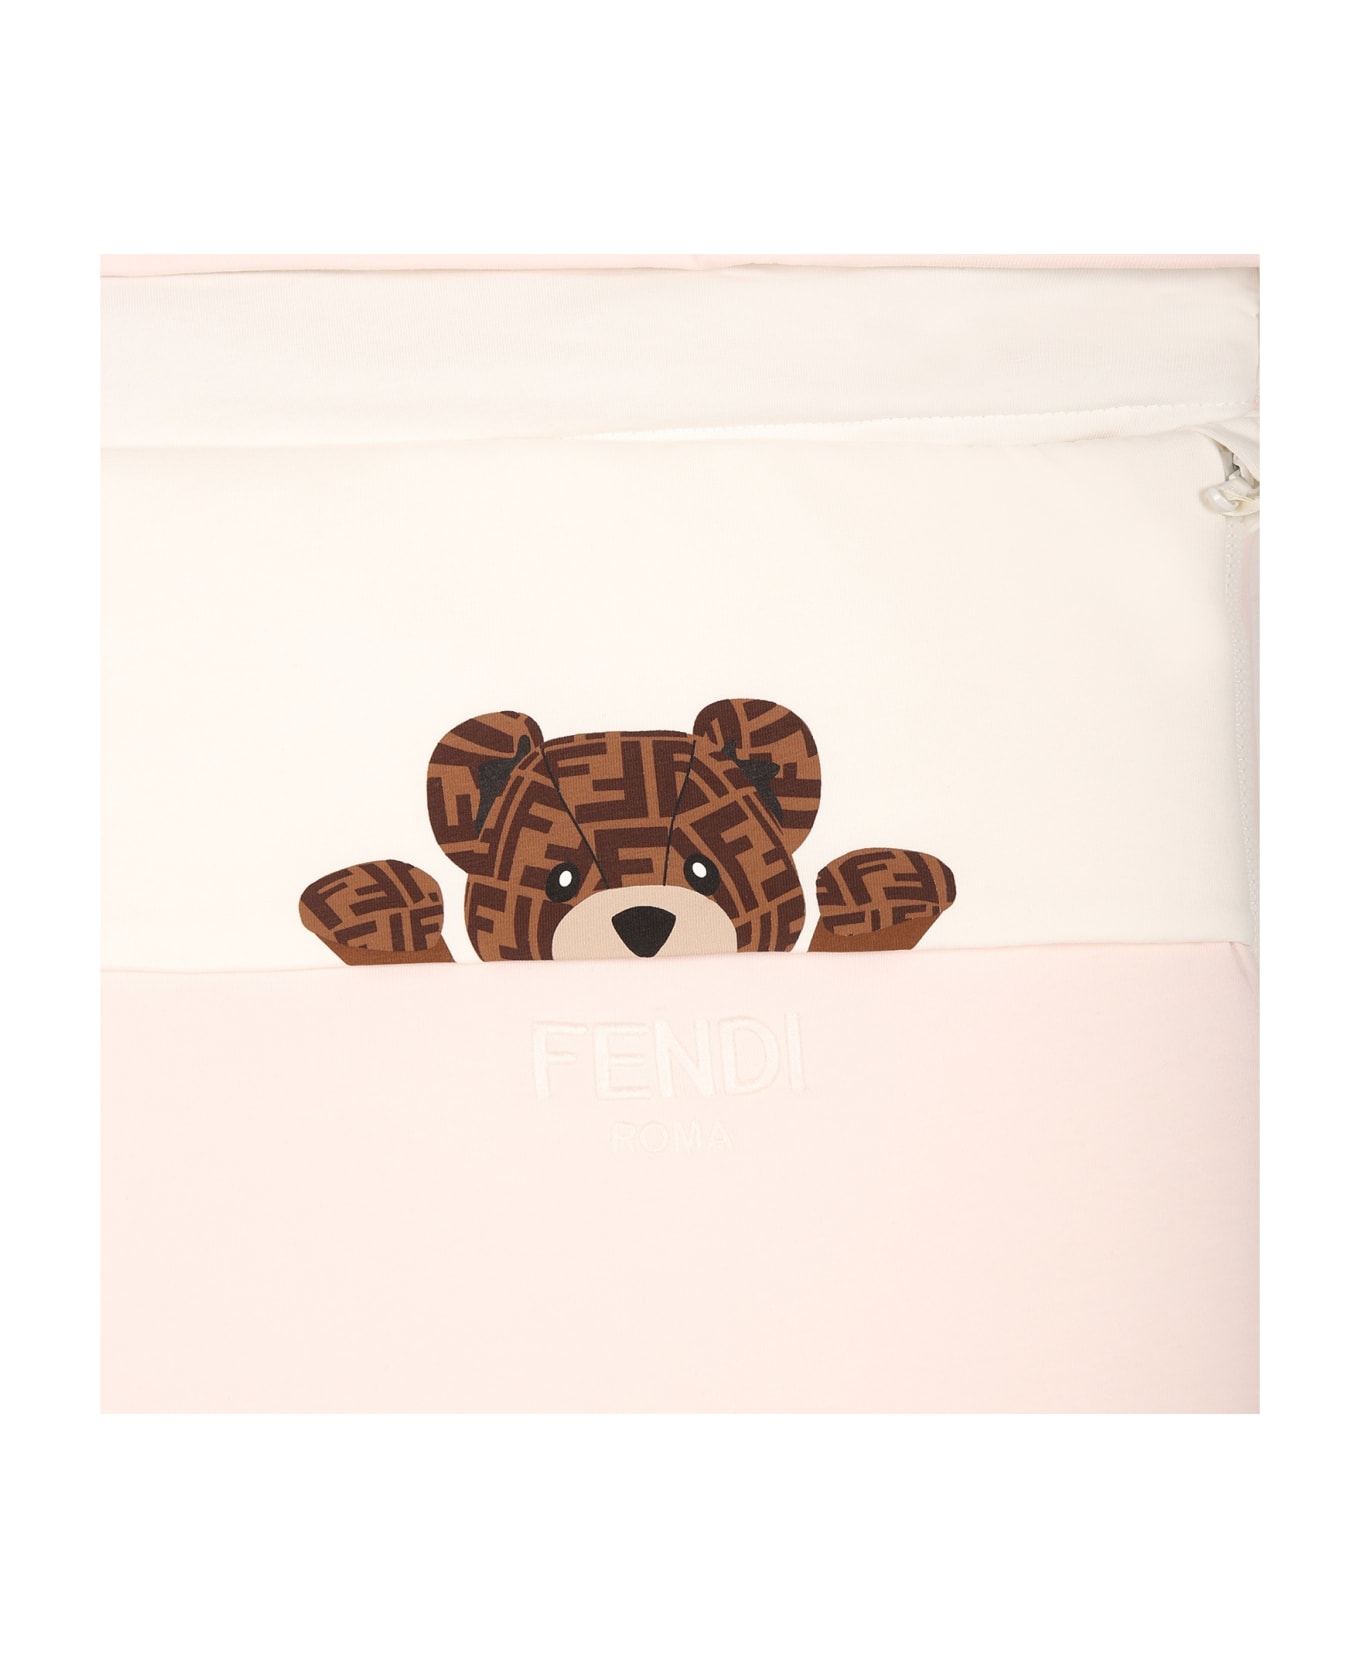 Fendi Pink Sleeping Bag For Baby Girl With Bear And Fendi Logo - Pink アクセサリー＆ギフト